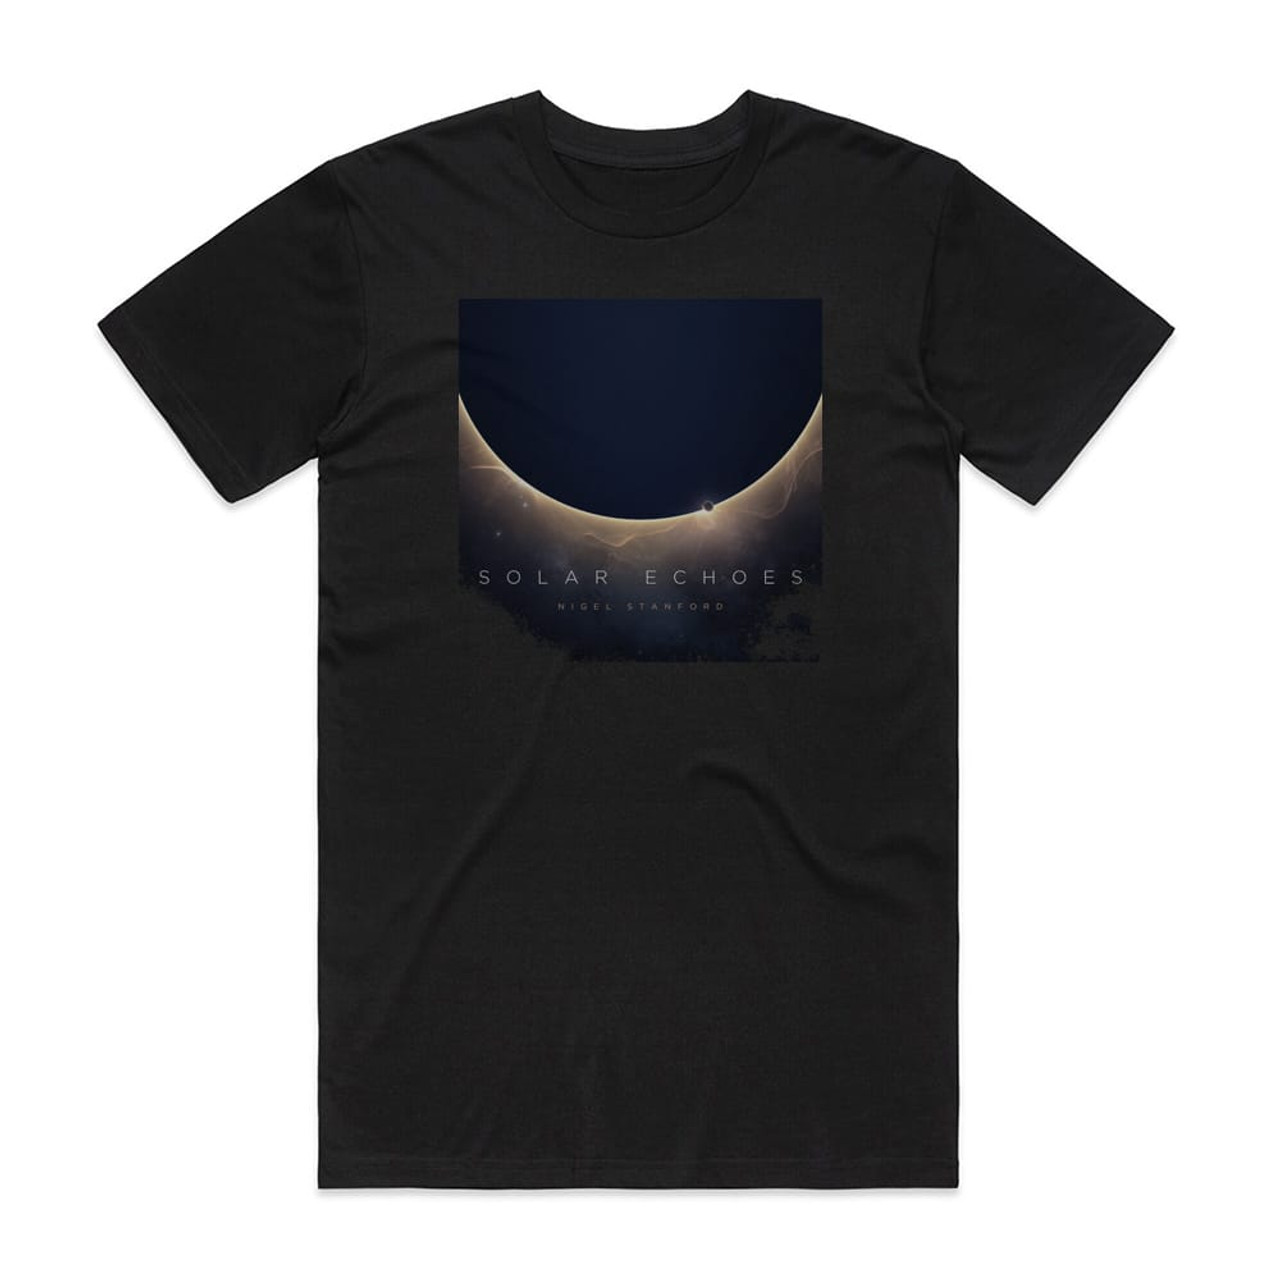 Nigel Stanford Solar Echoes Album Cover T-Shirt Black